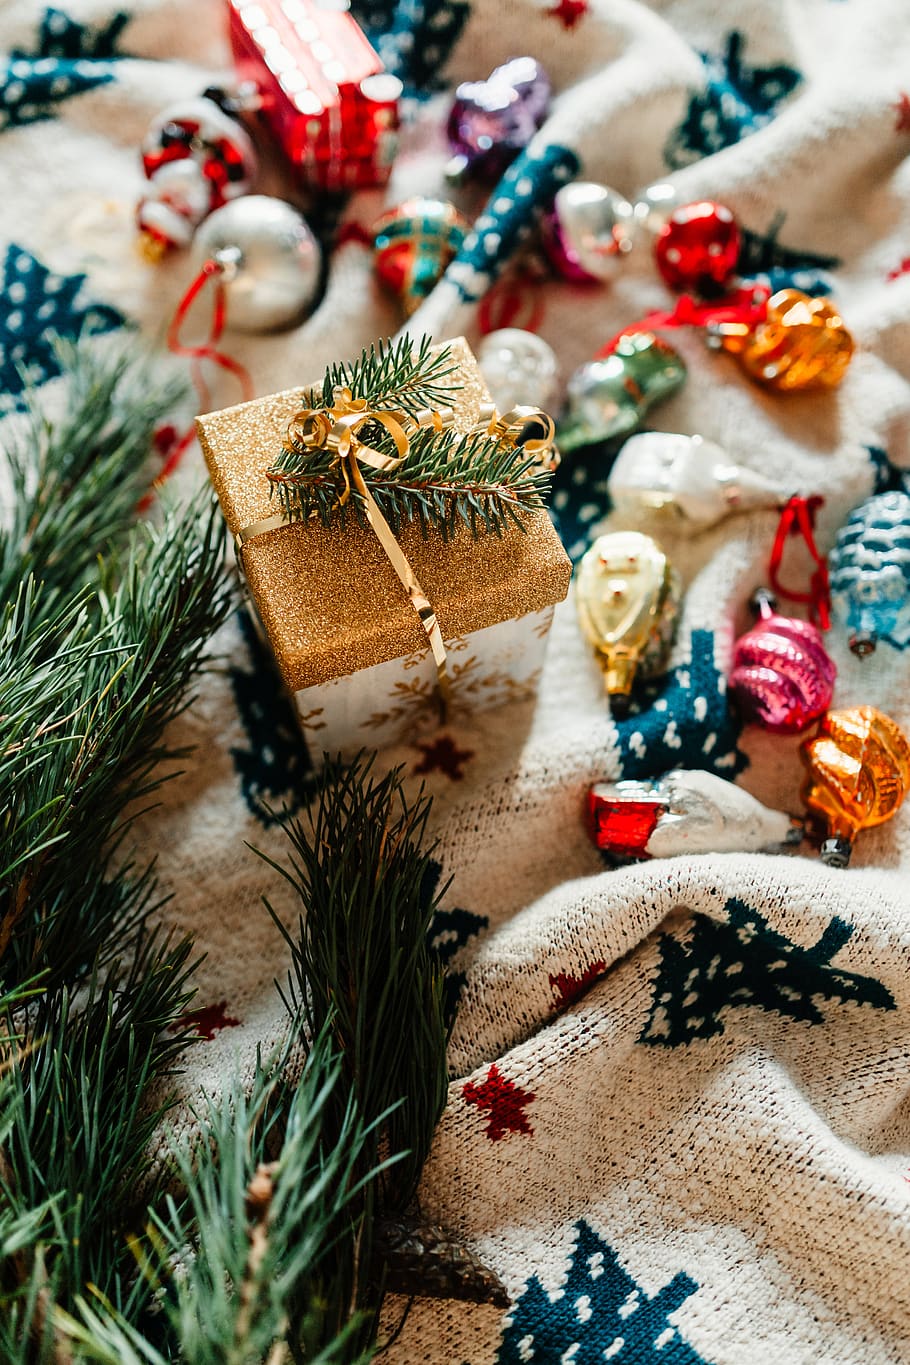 hadiah Natal, xmas, hadiah, menyajikan, bola pohon, bola Natal, dekorasi, dekorasi Natal, musim dingin, Desember